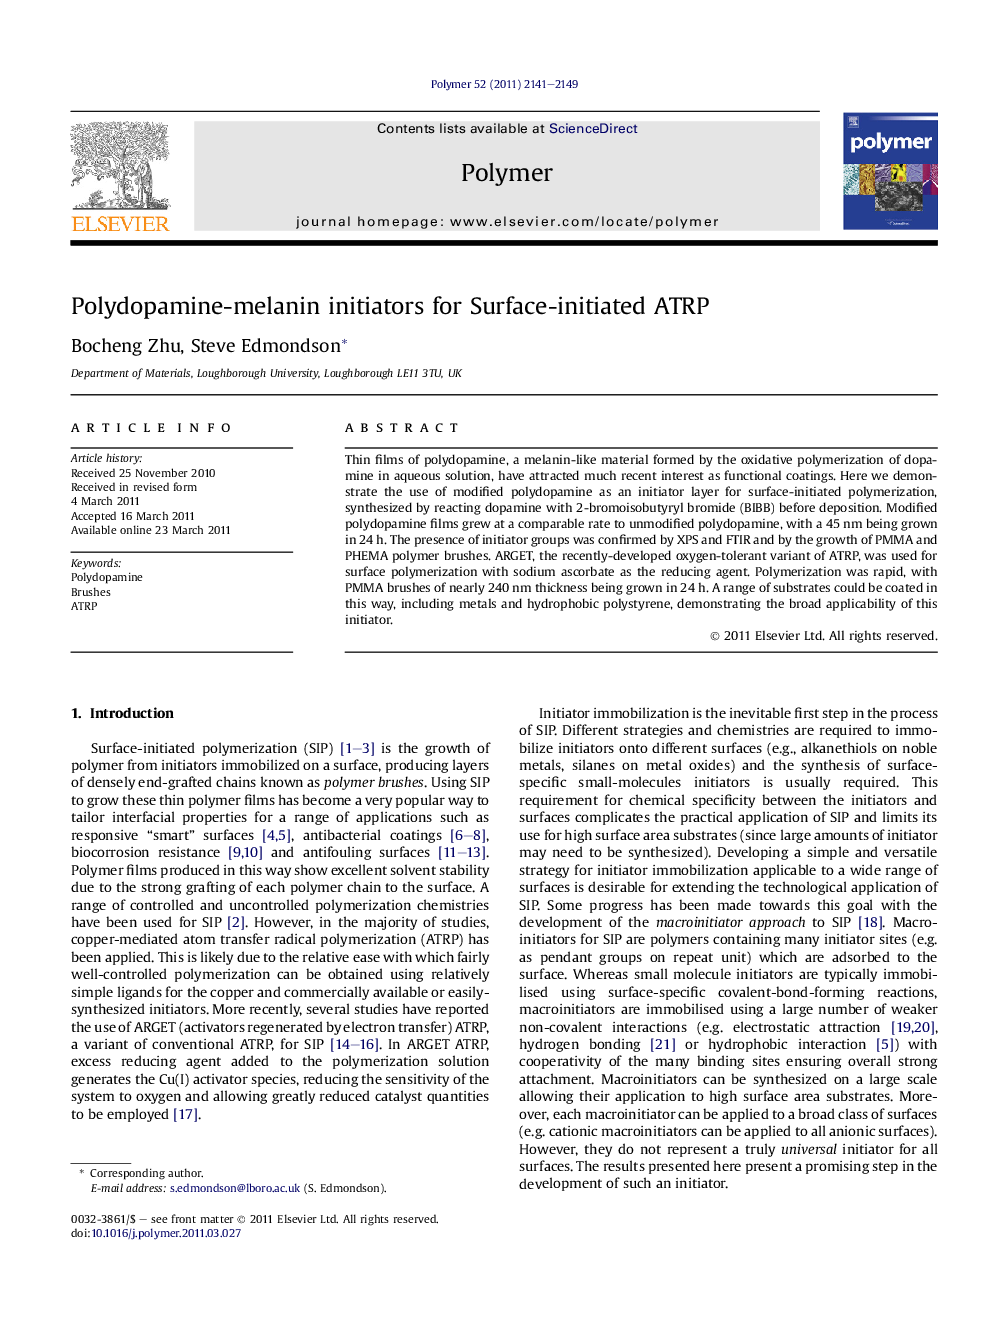 Polydopamine-melanin initiators for Surface-initiated ATRP